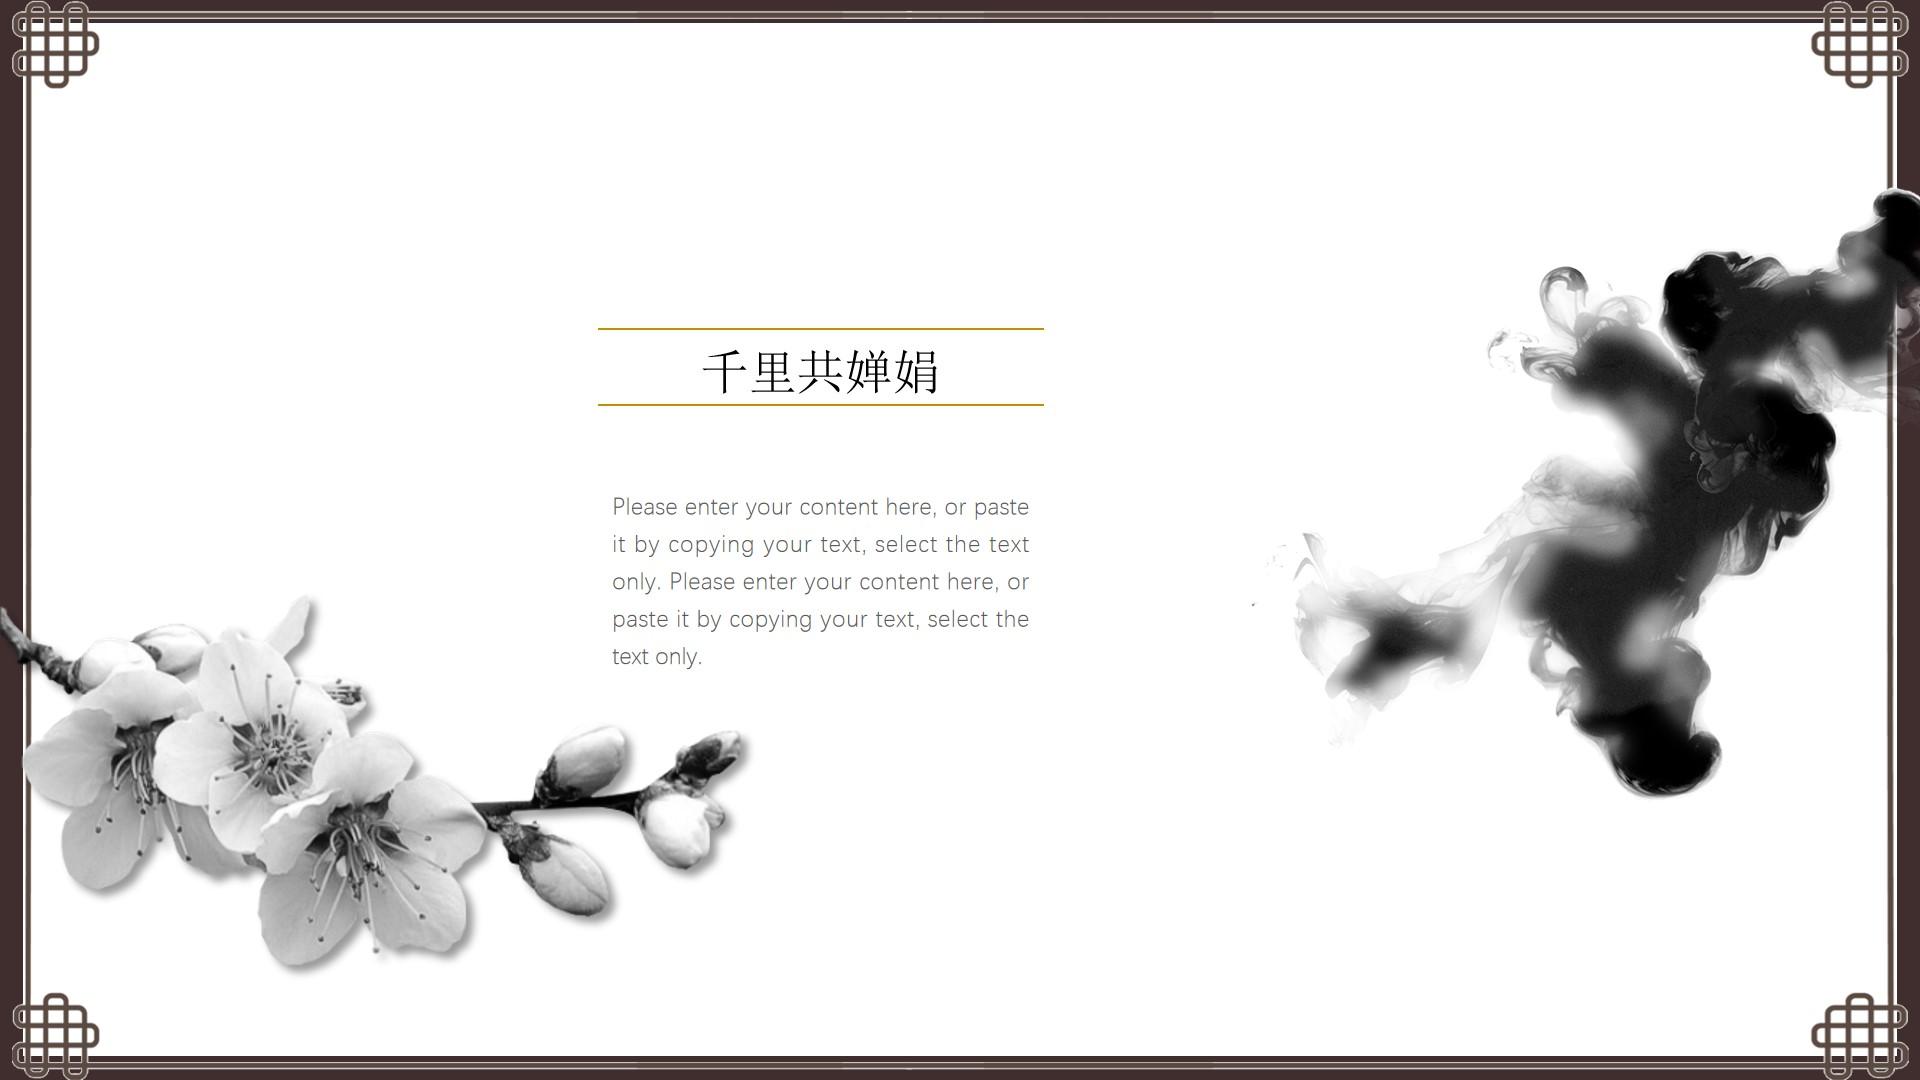 教育教学黑色灰色白色简洁中国风text enter content paste select云素材PPT模板1672580340191